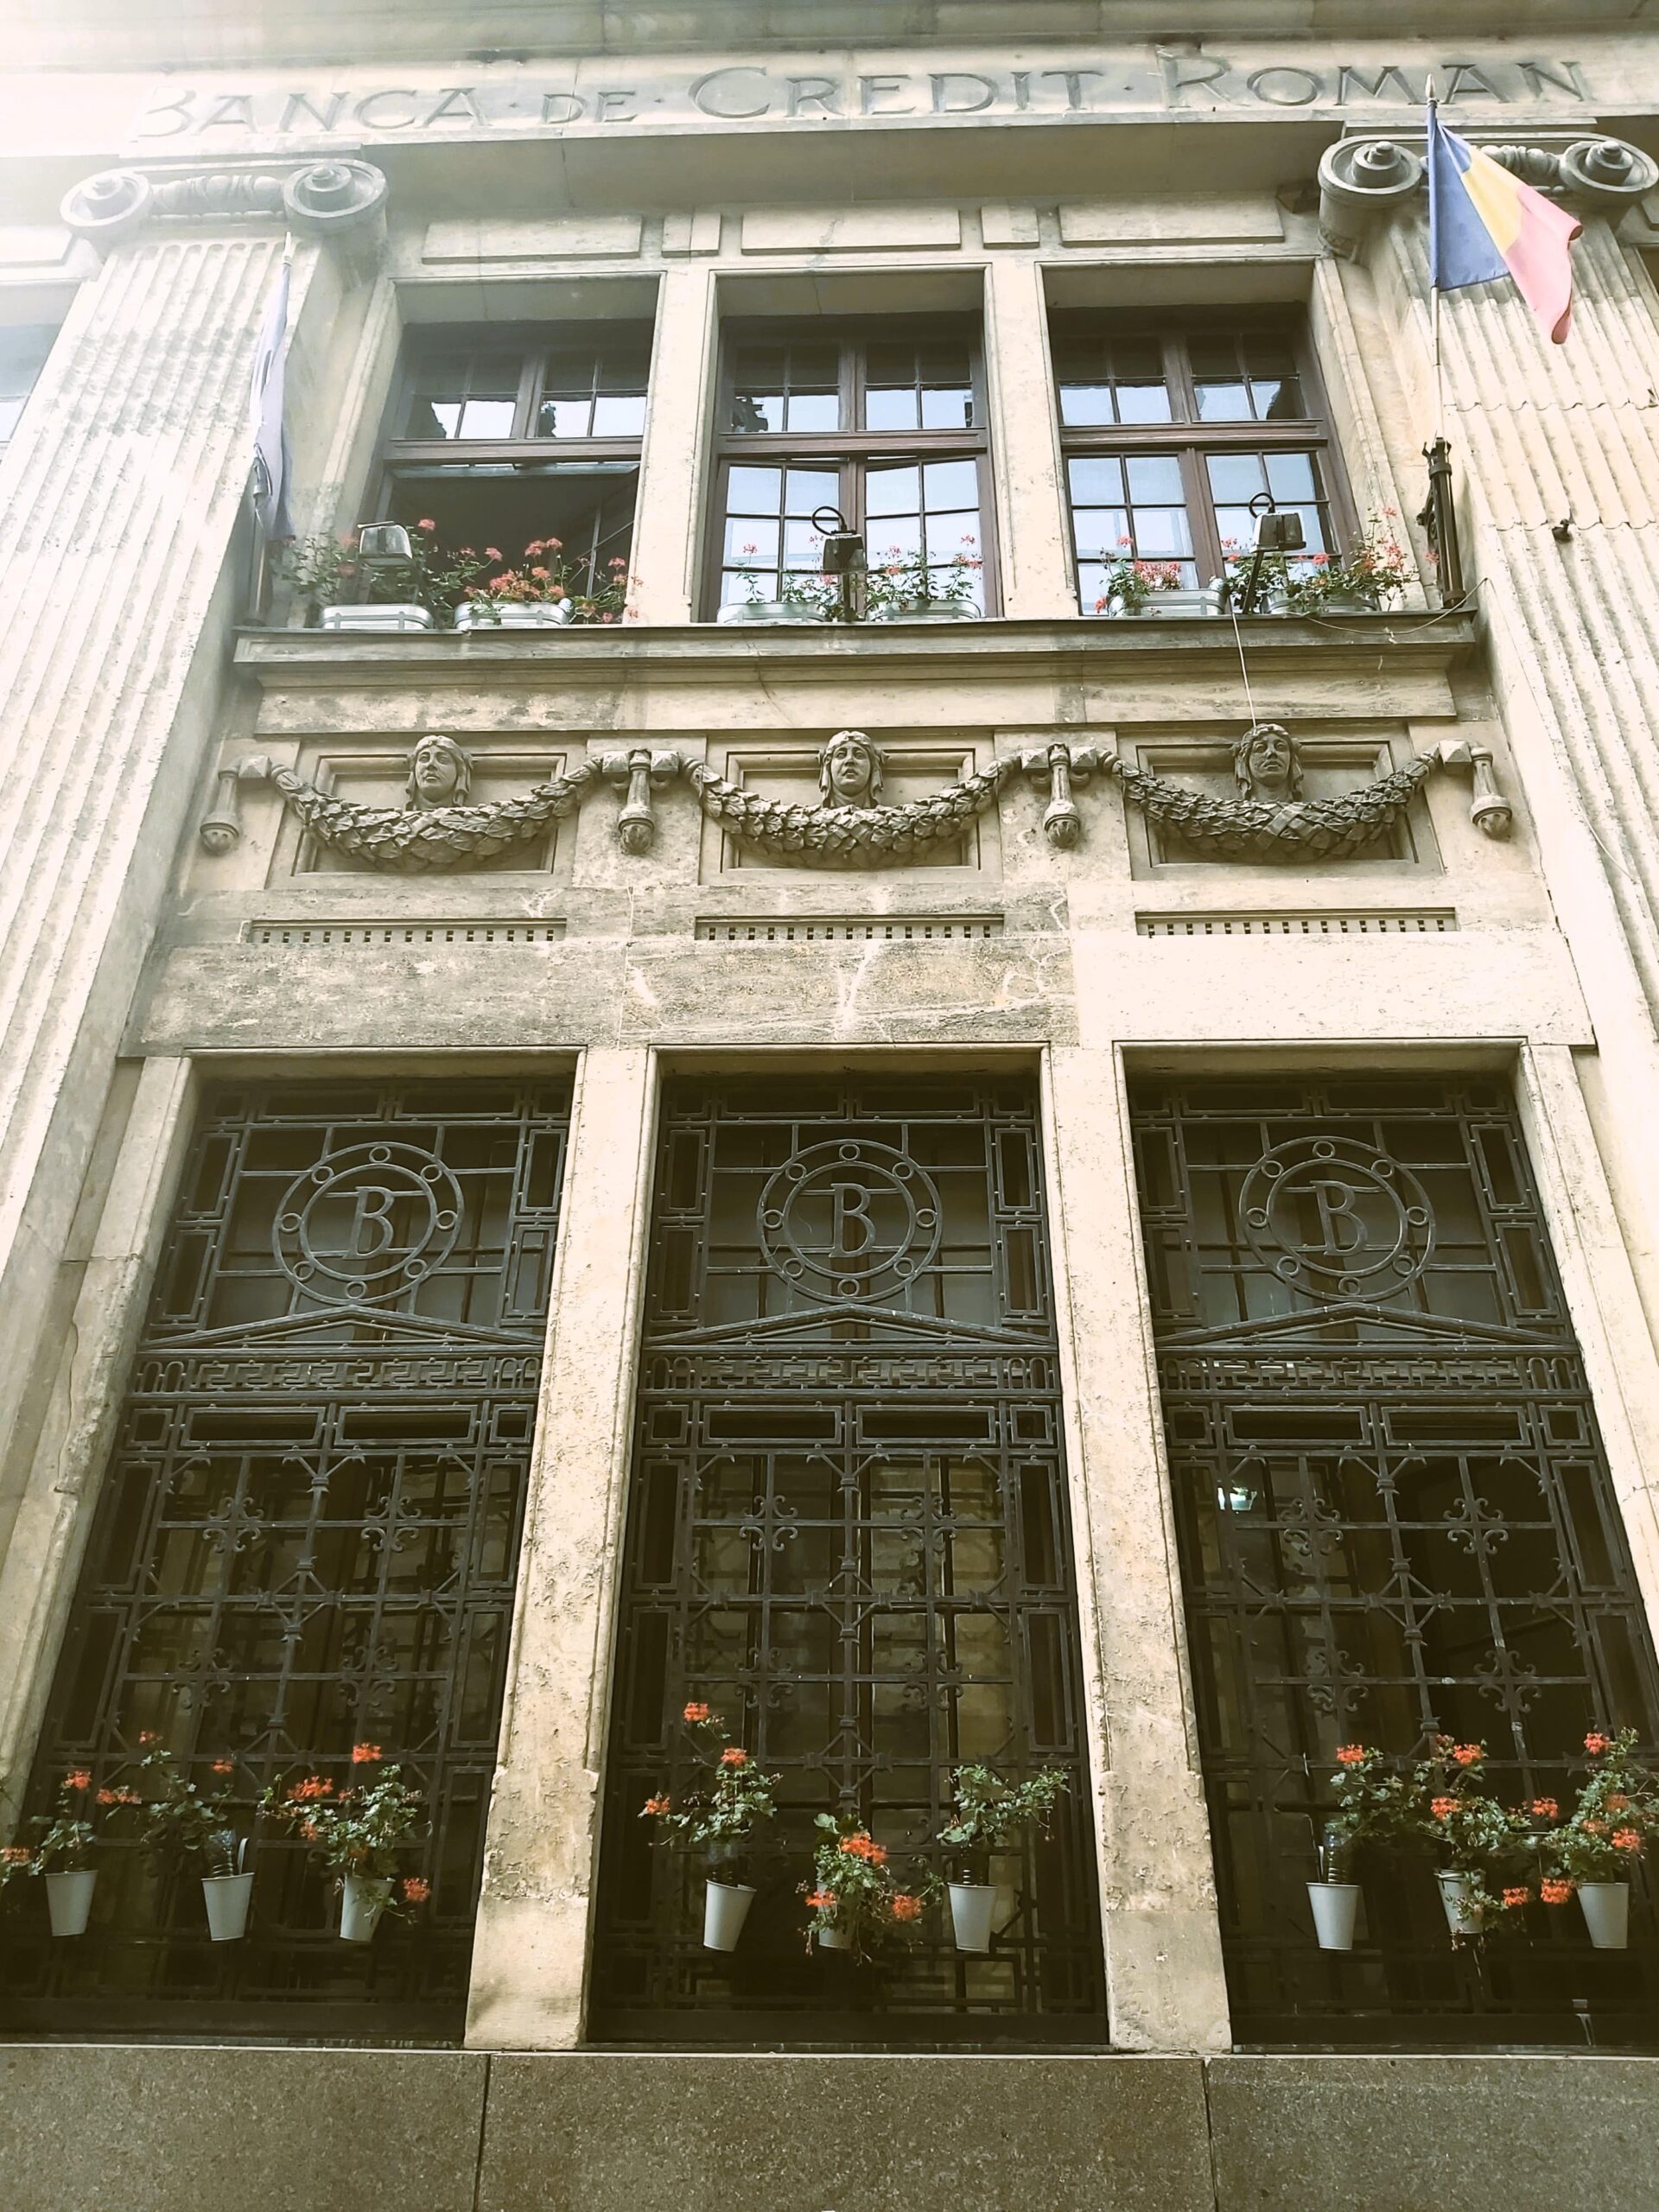 Old windows on the Romanian Bank in București, Romania